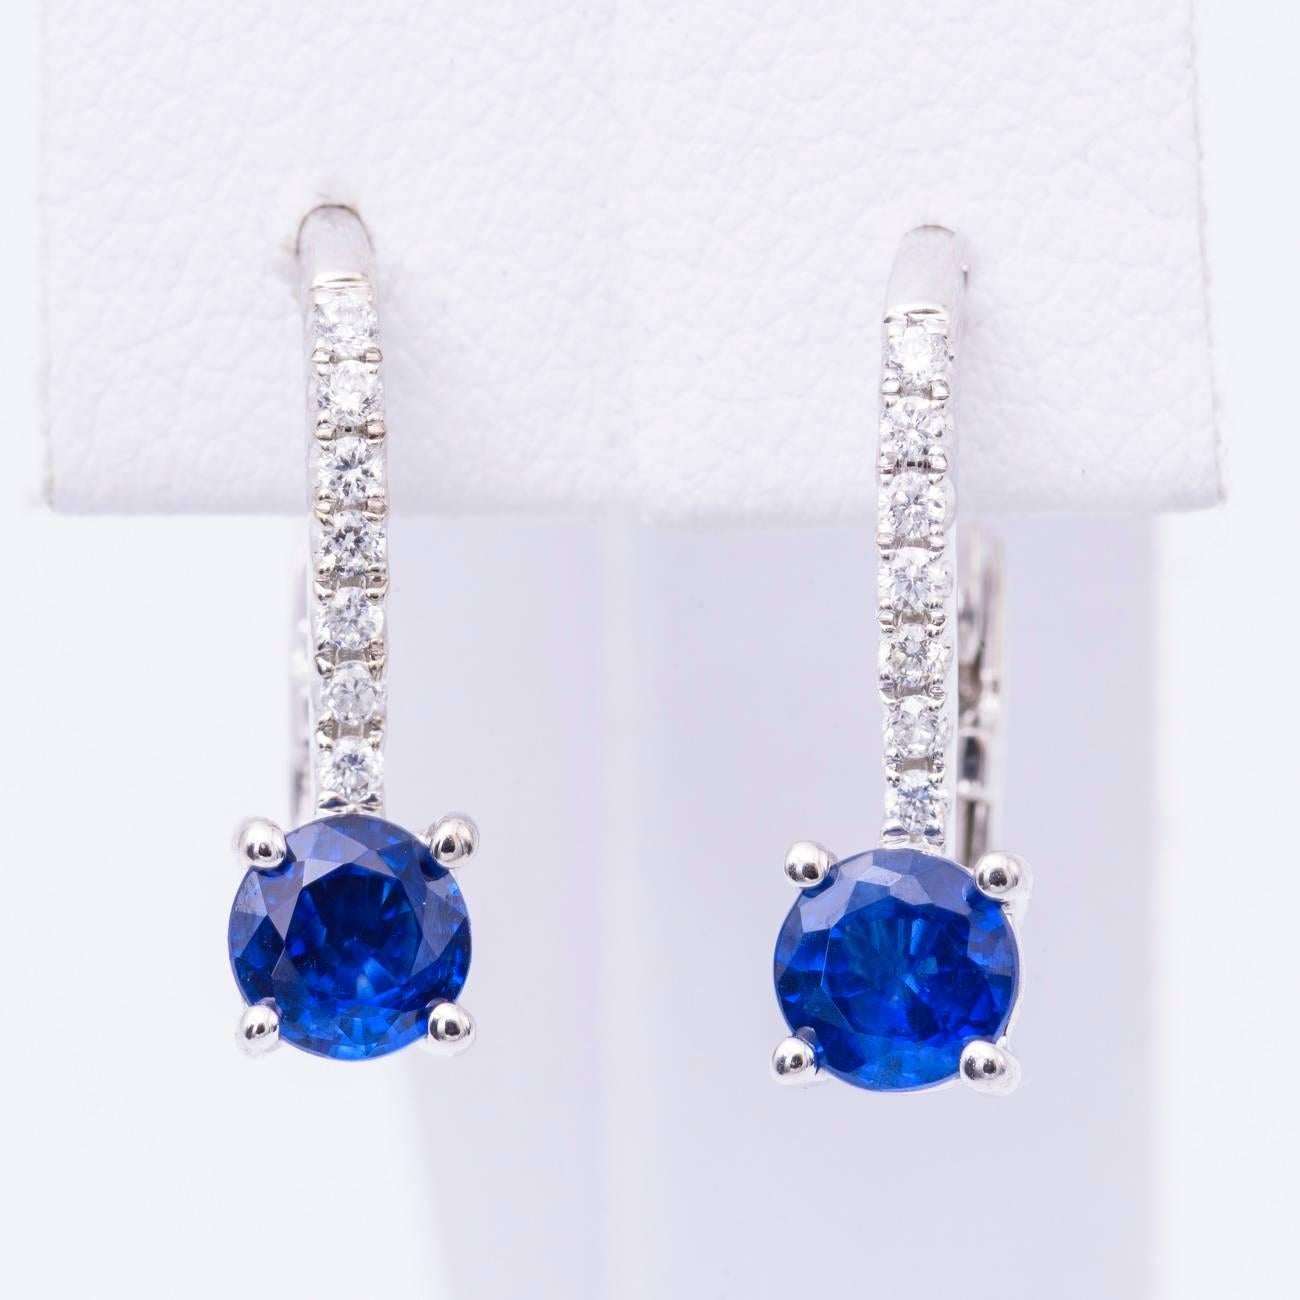 Sapphire Earrings 16 mm long
Sapphire 0.98 Cts. 4.5 mm
Diamonds 0.13 Cts 